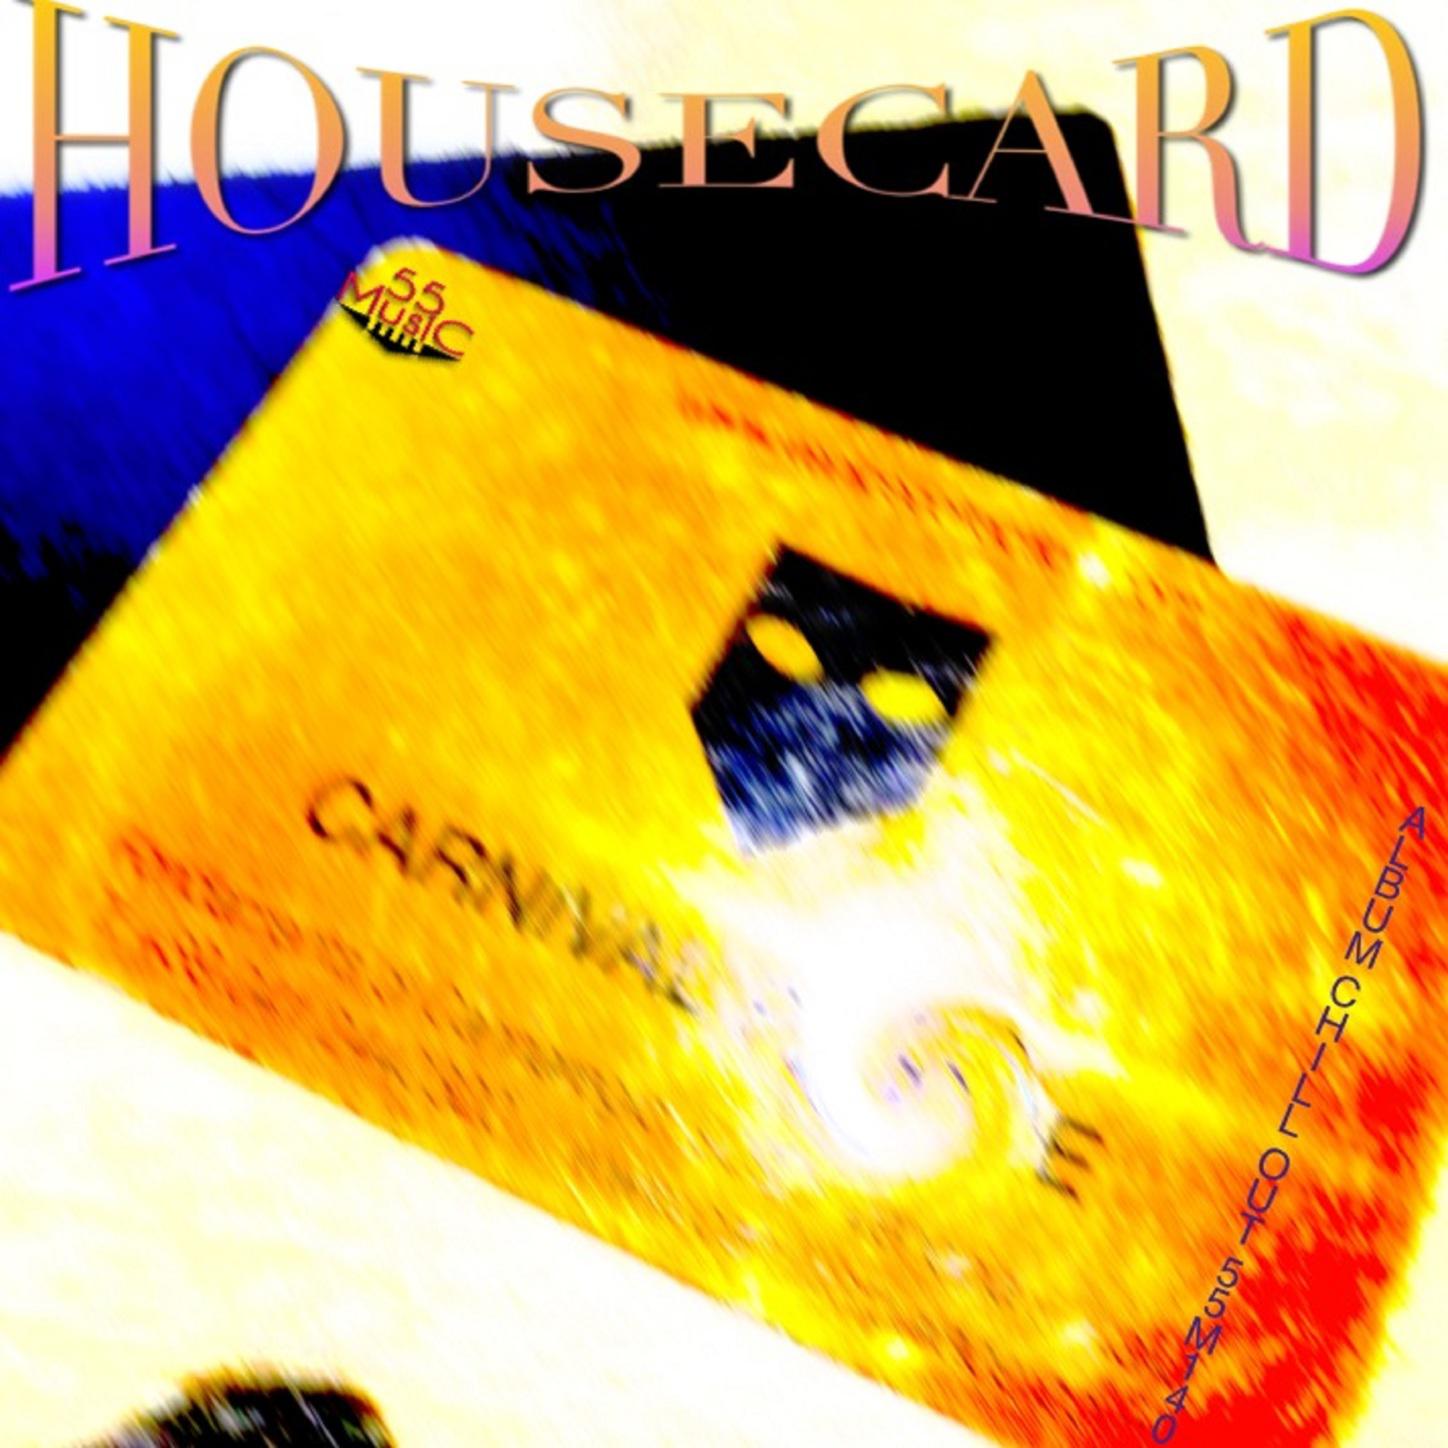 Housecard